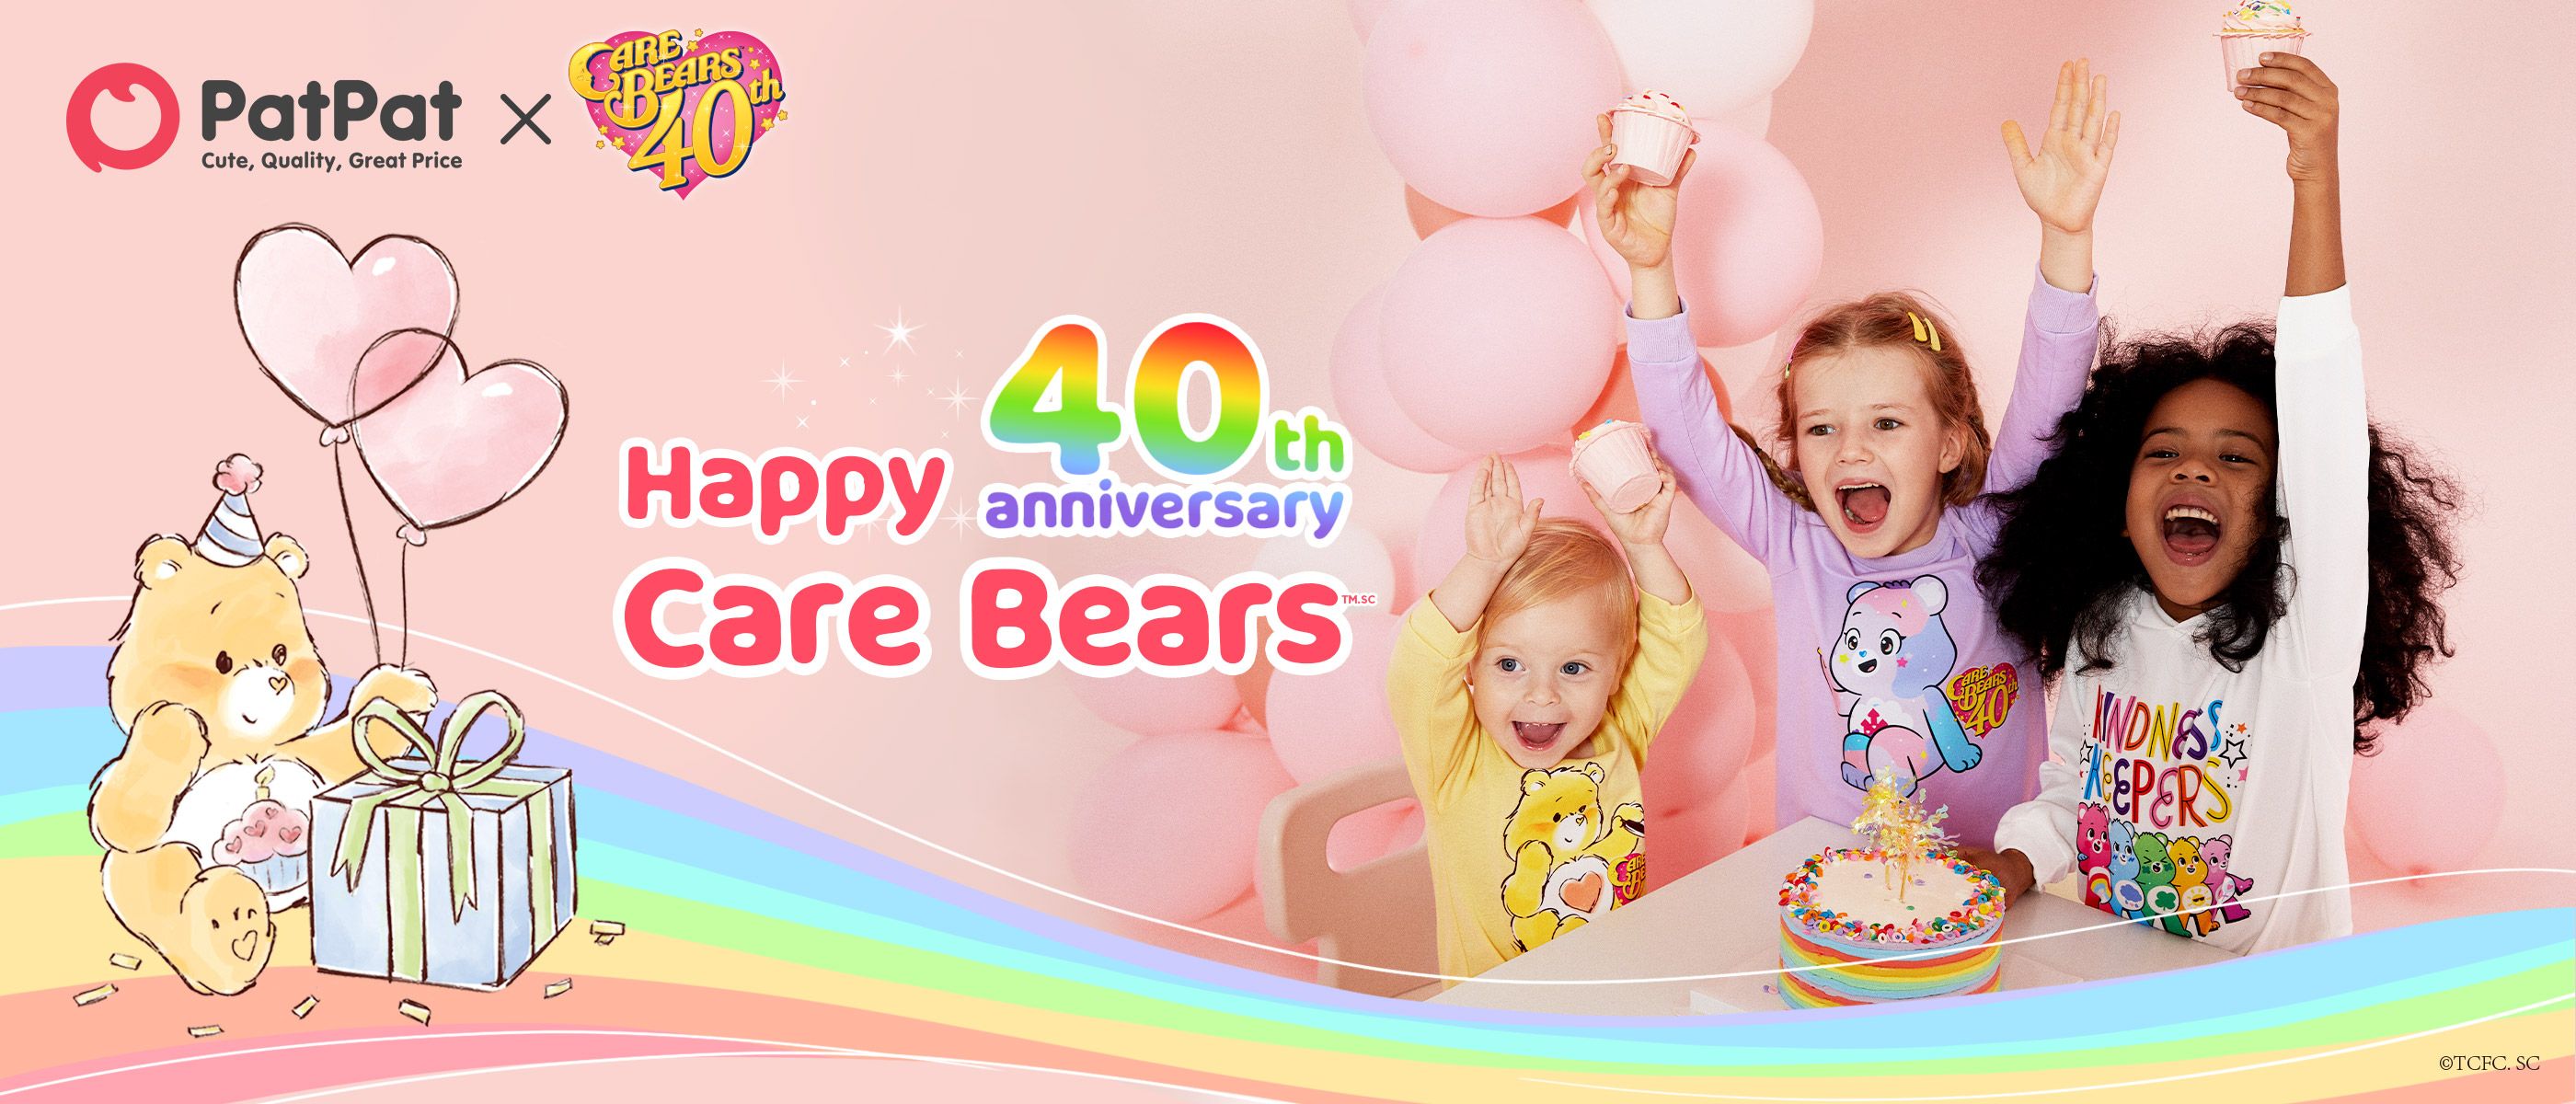 Care Bear 40th anniversary